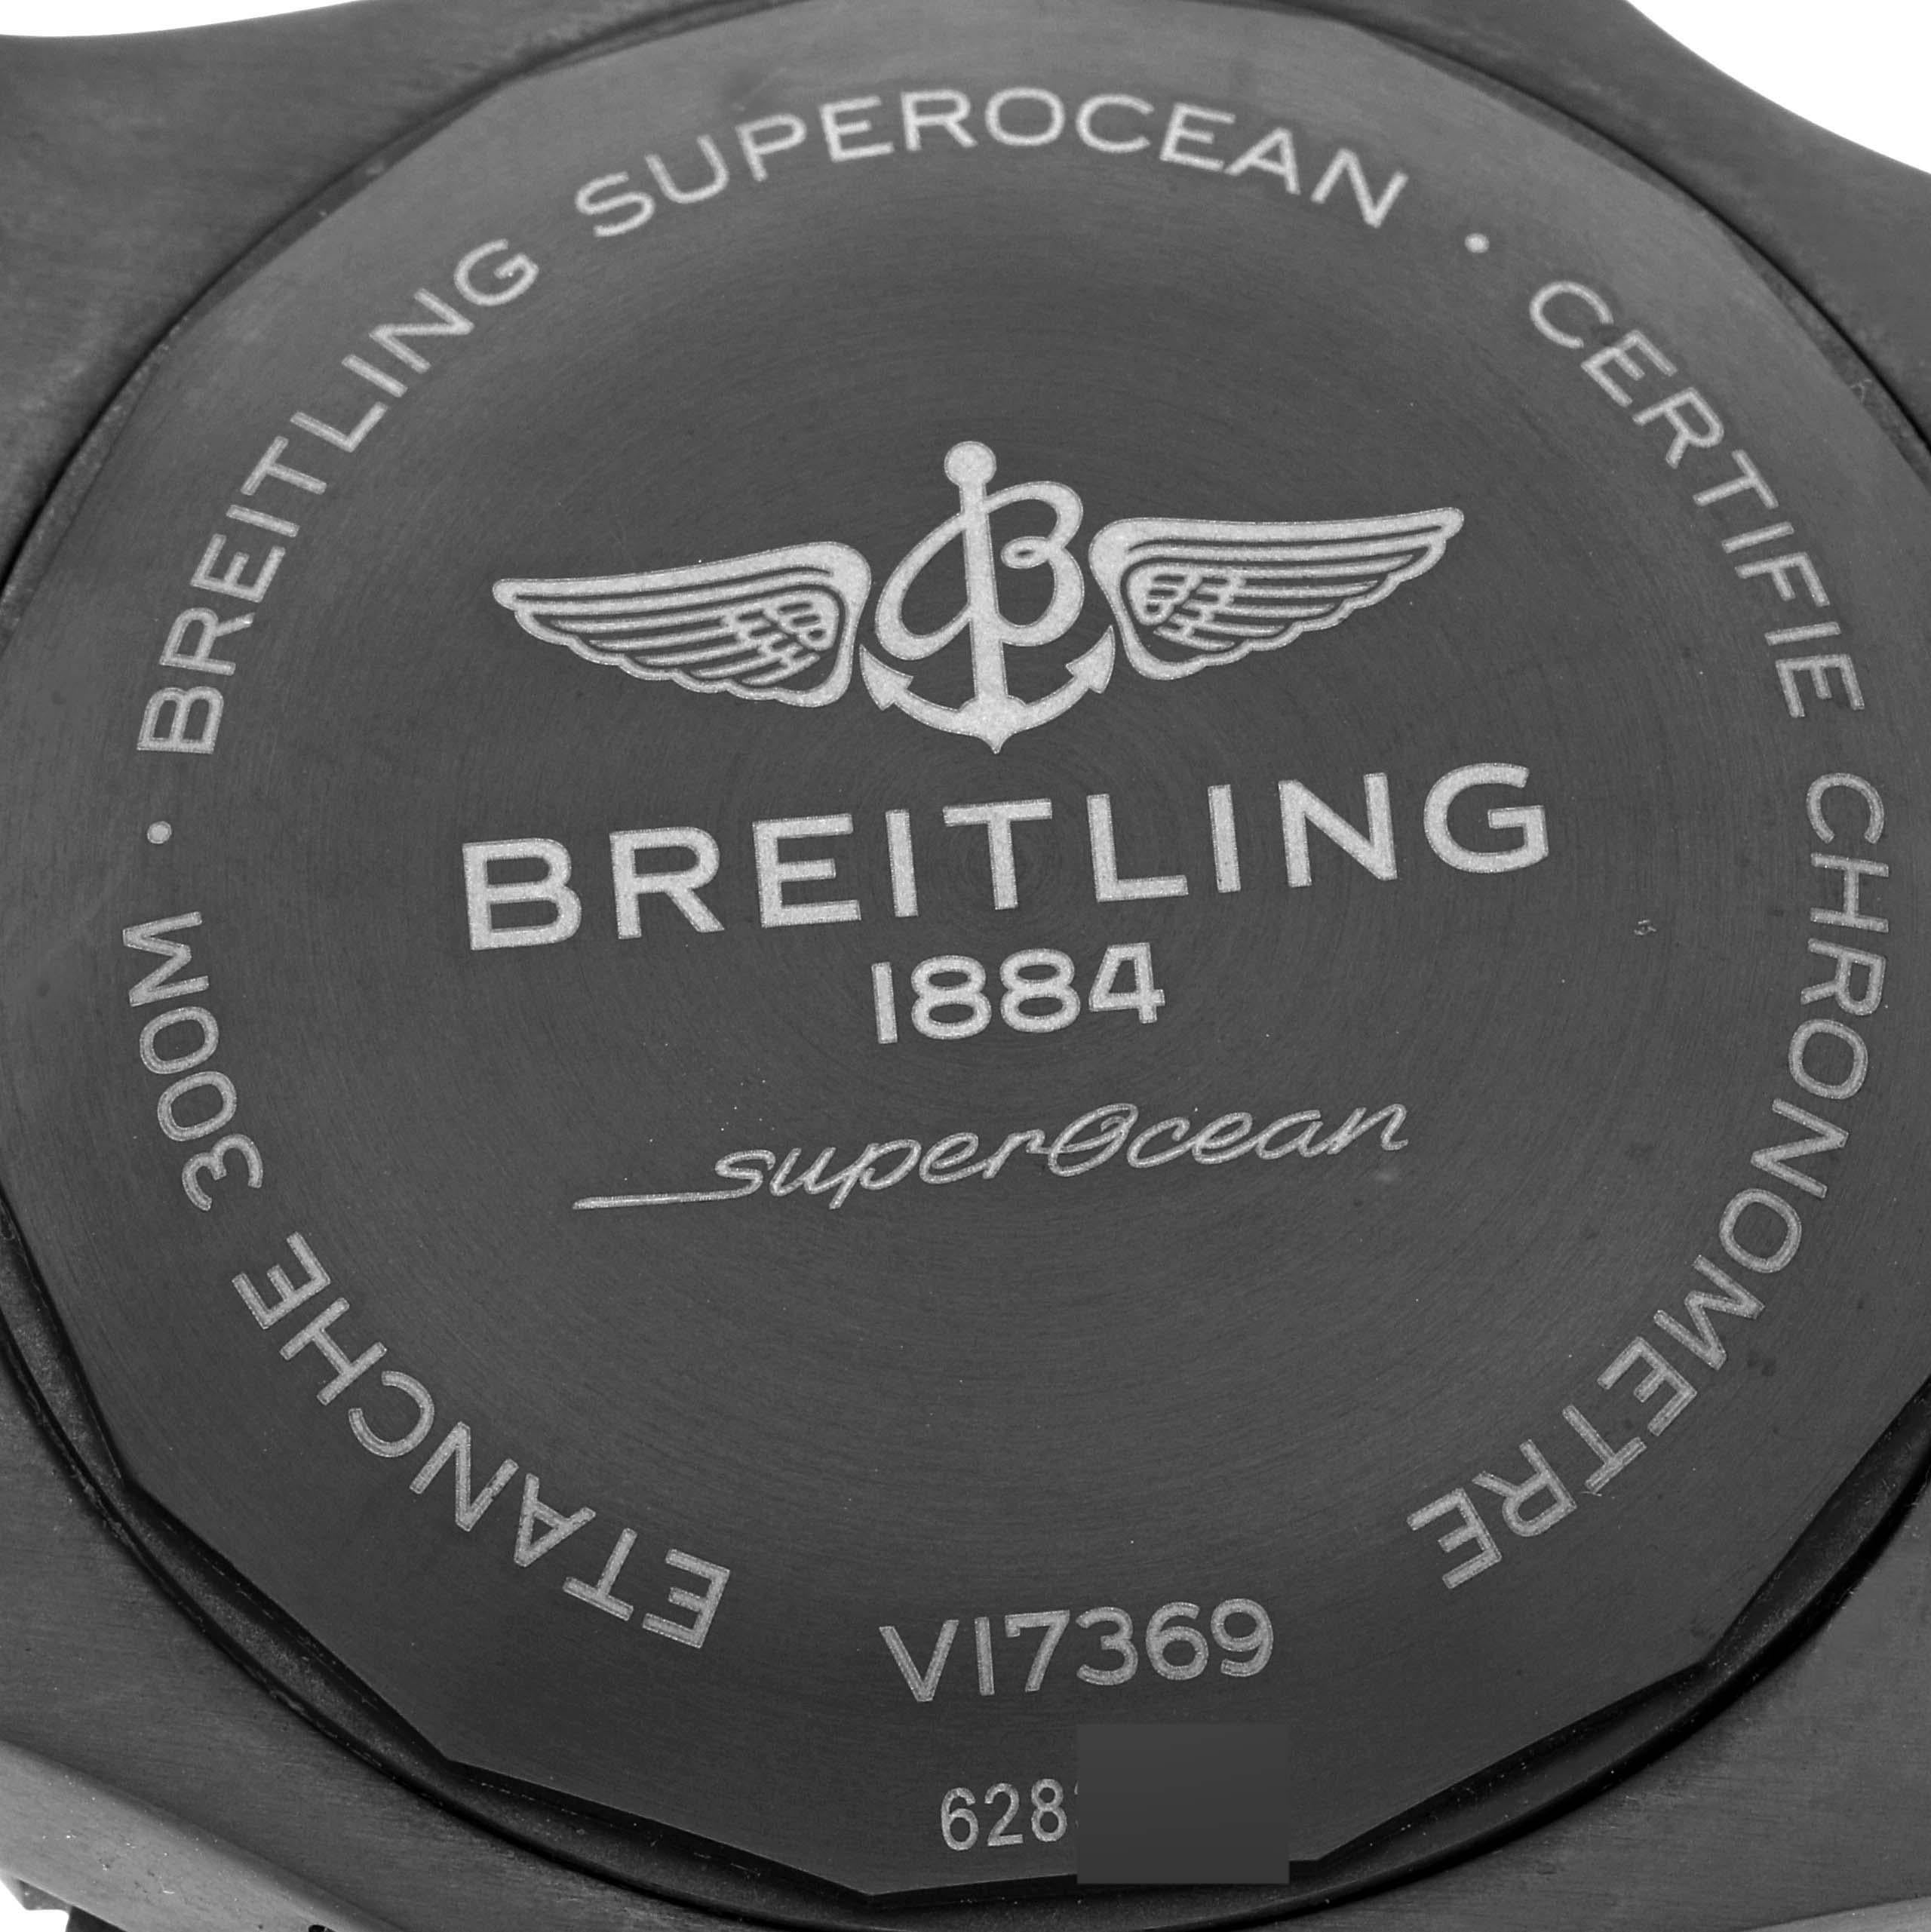 Men's Breitling Superocean 48 Blue Dial Titanium Mens Watch V17369 Box Card For Sale